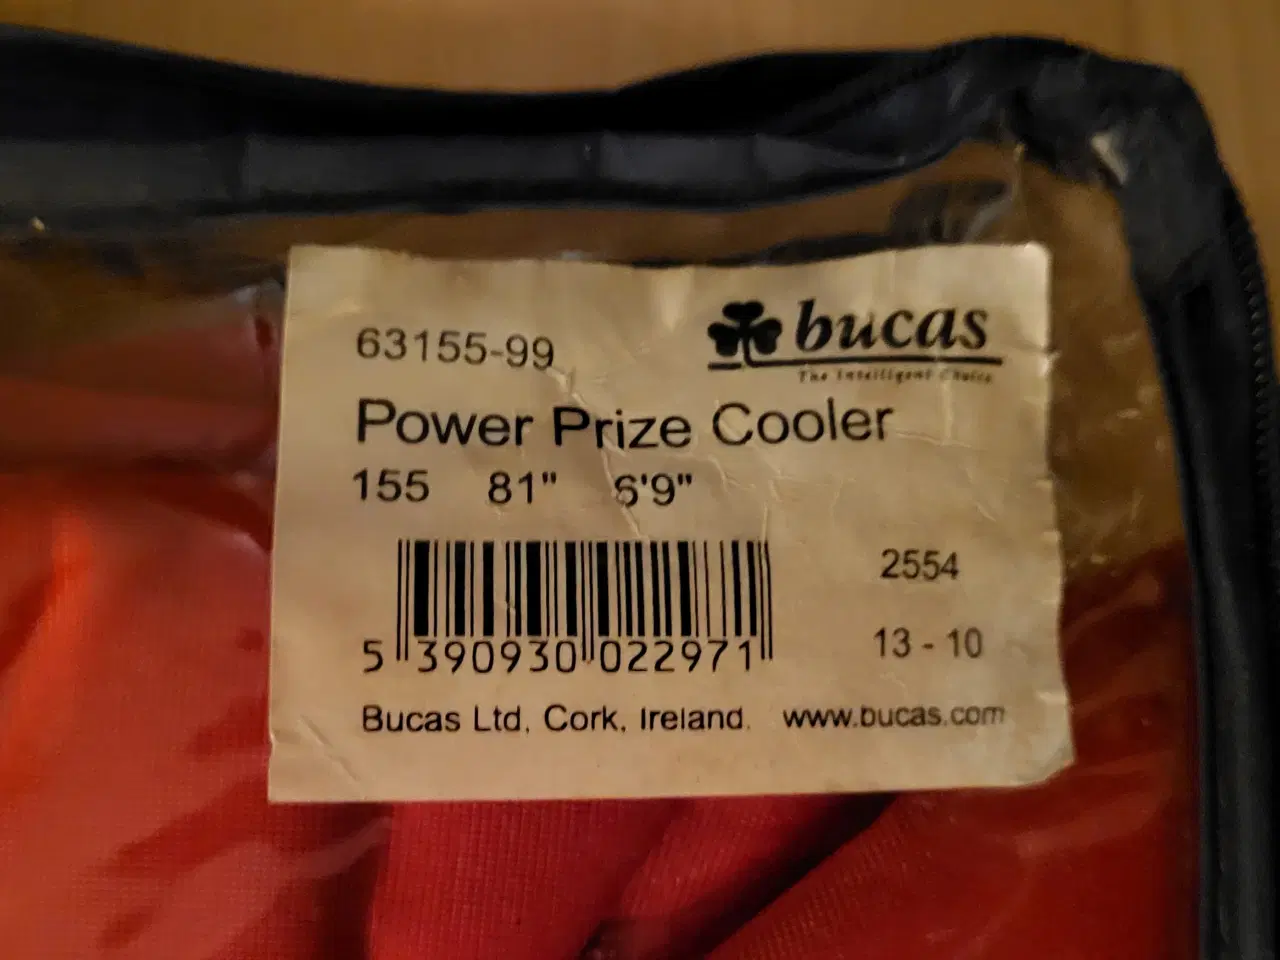 Billede 3 - Bucas price cooler dækken